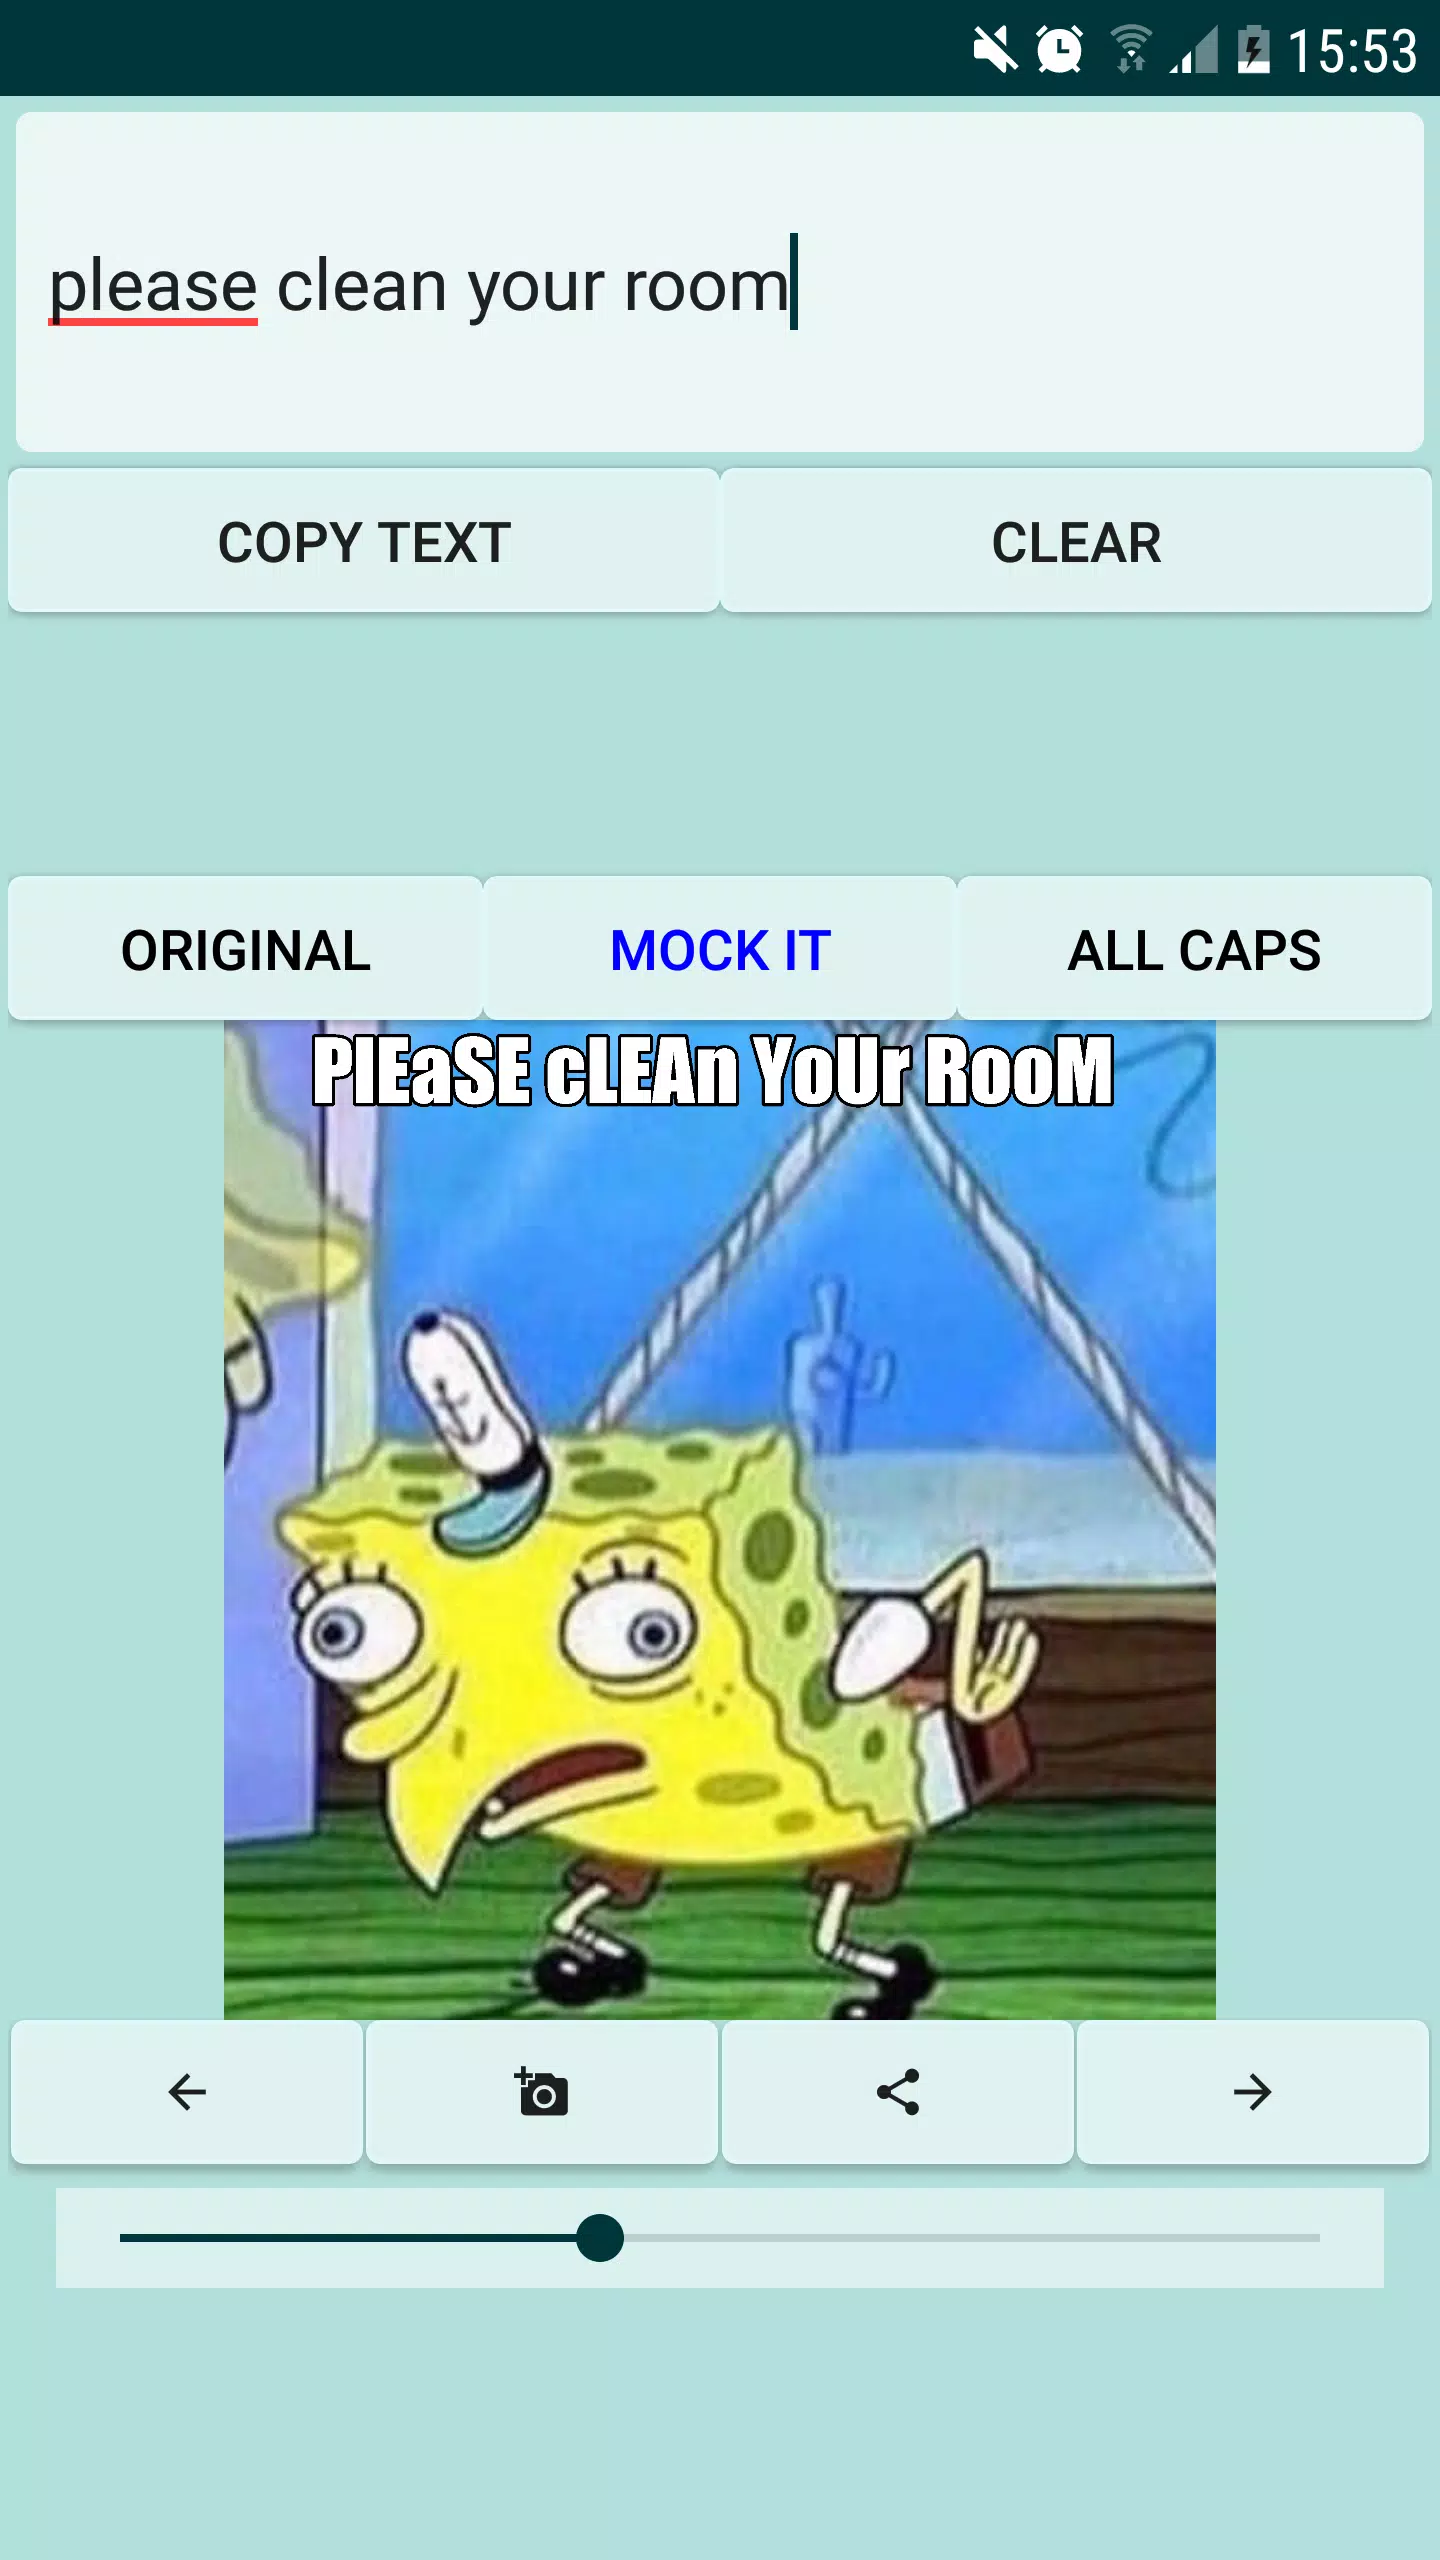 Spongebob Mocking meme generator APK for Android Download